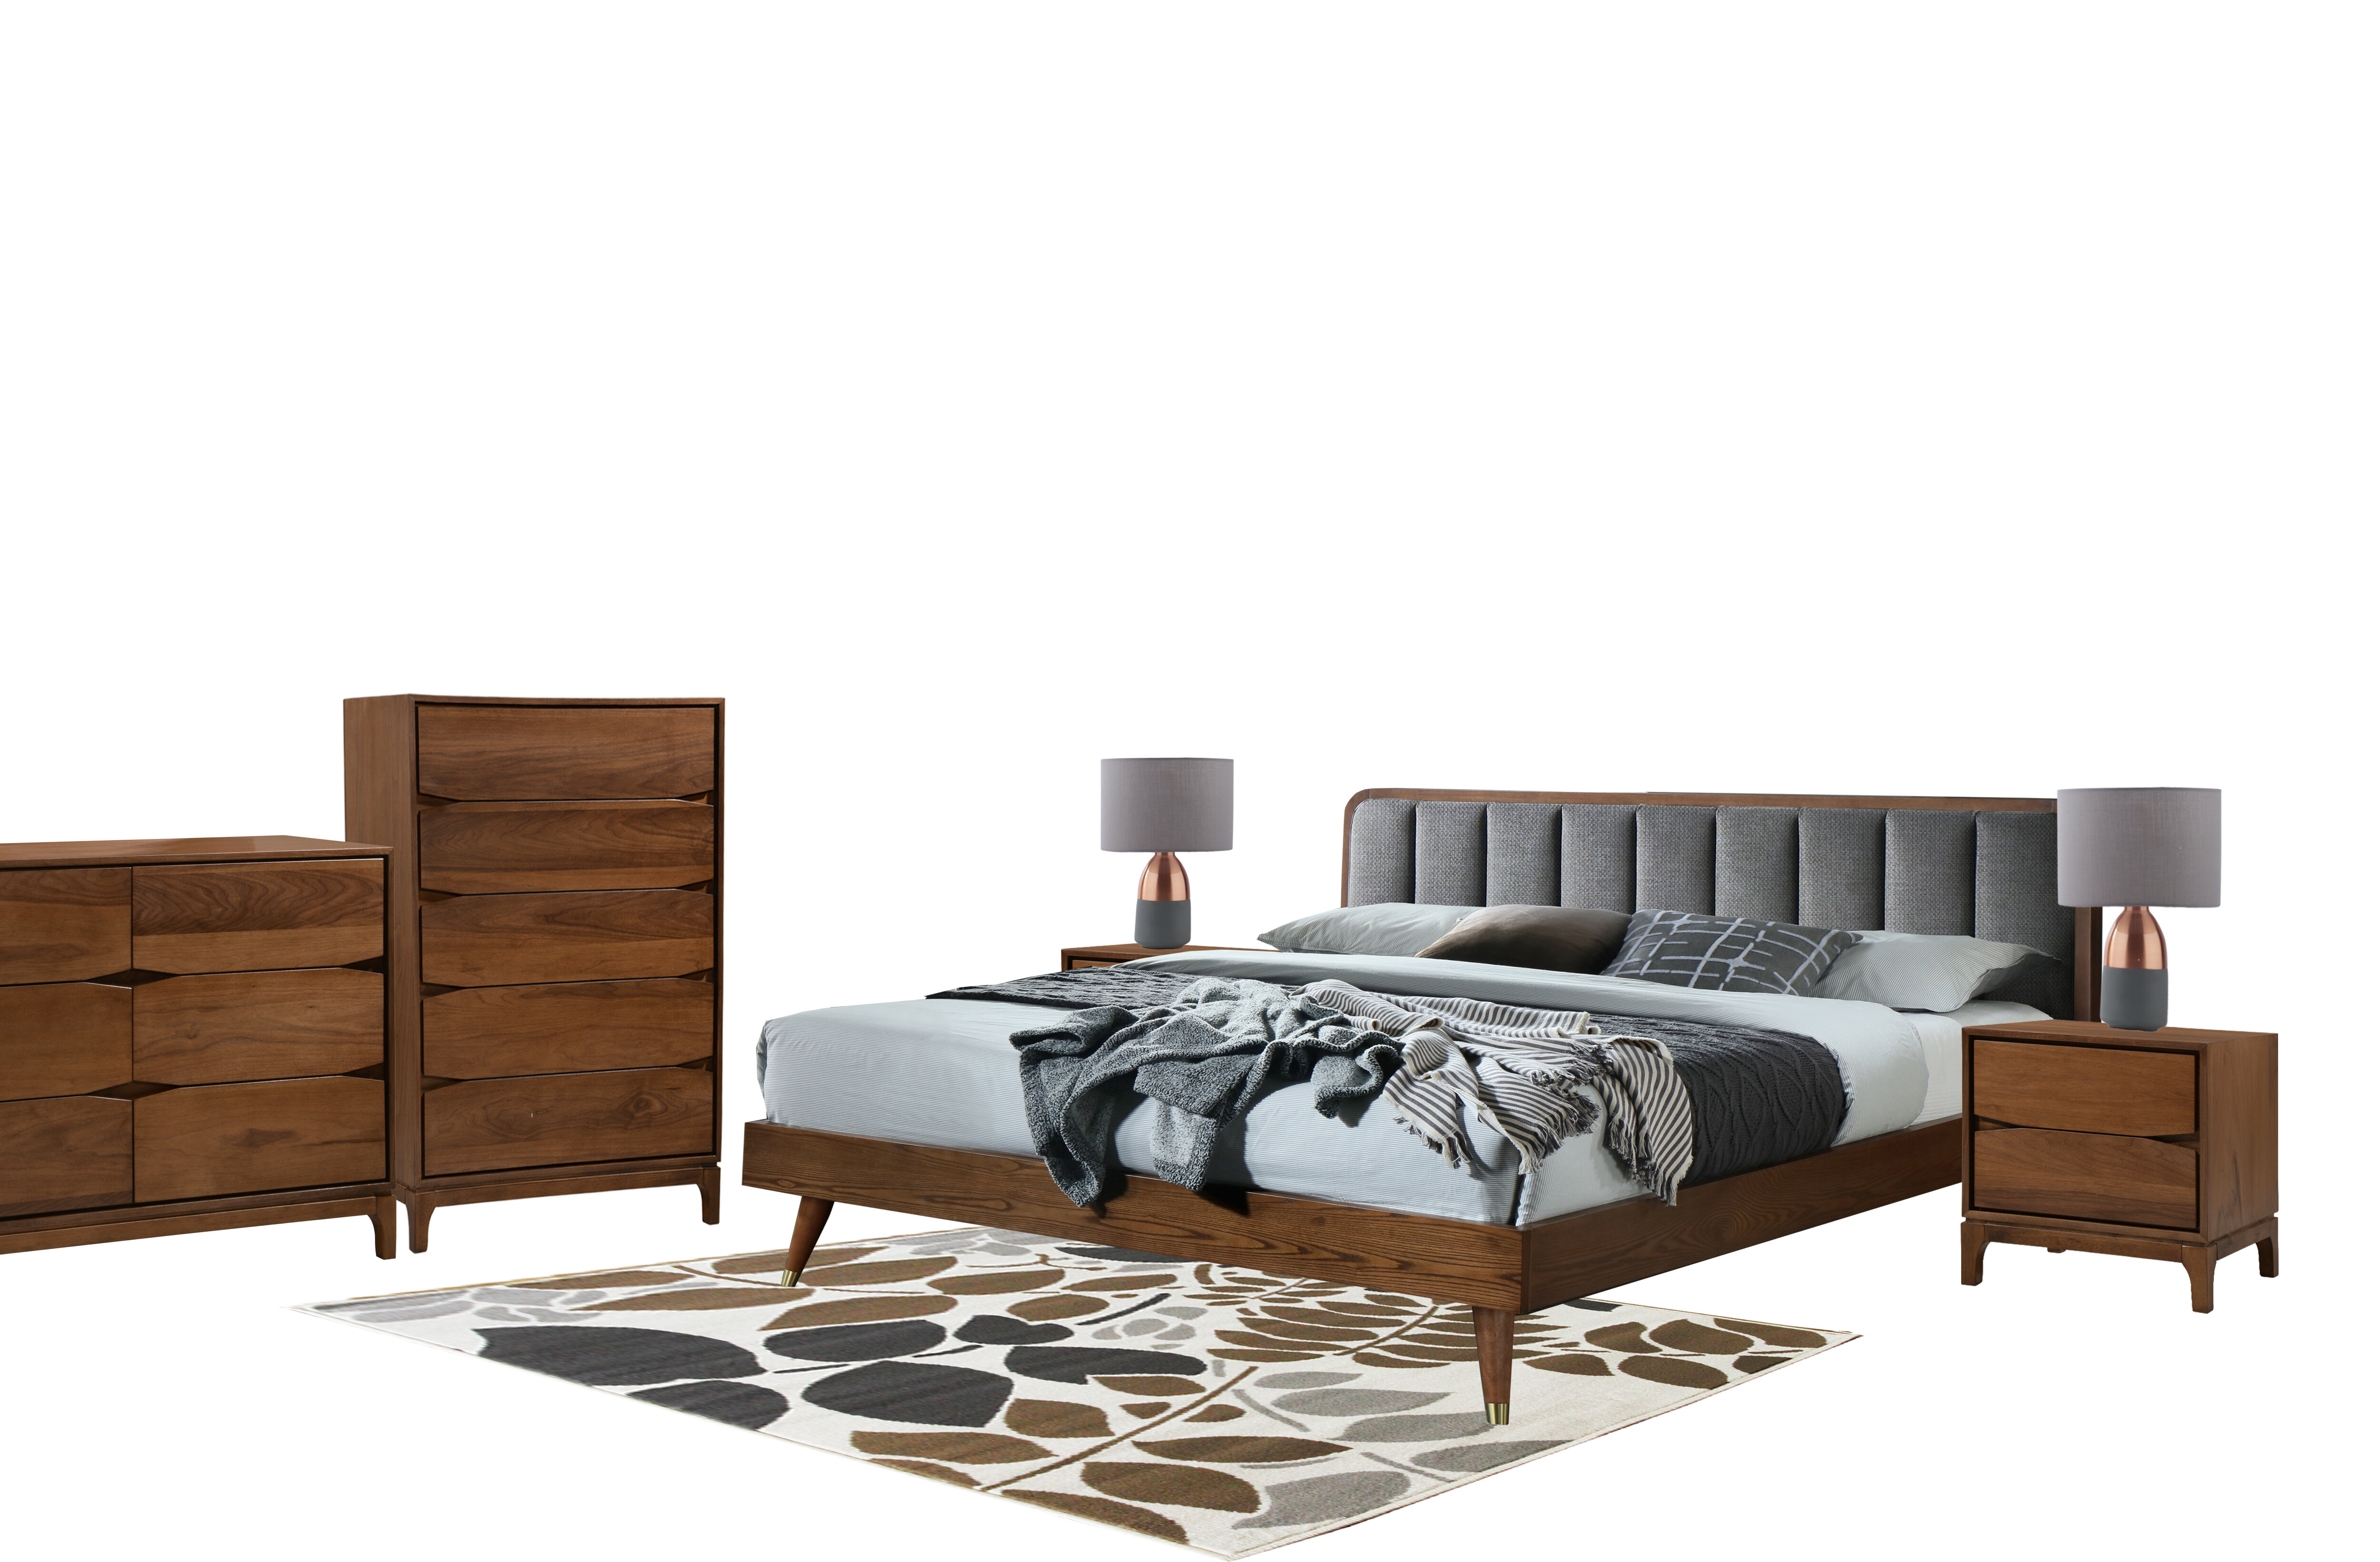 Upholstered Bedroom Sets You Ll Love In 2021 Wayfair